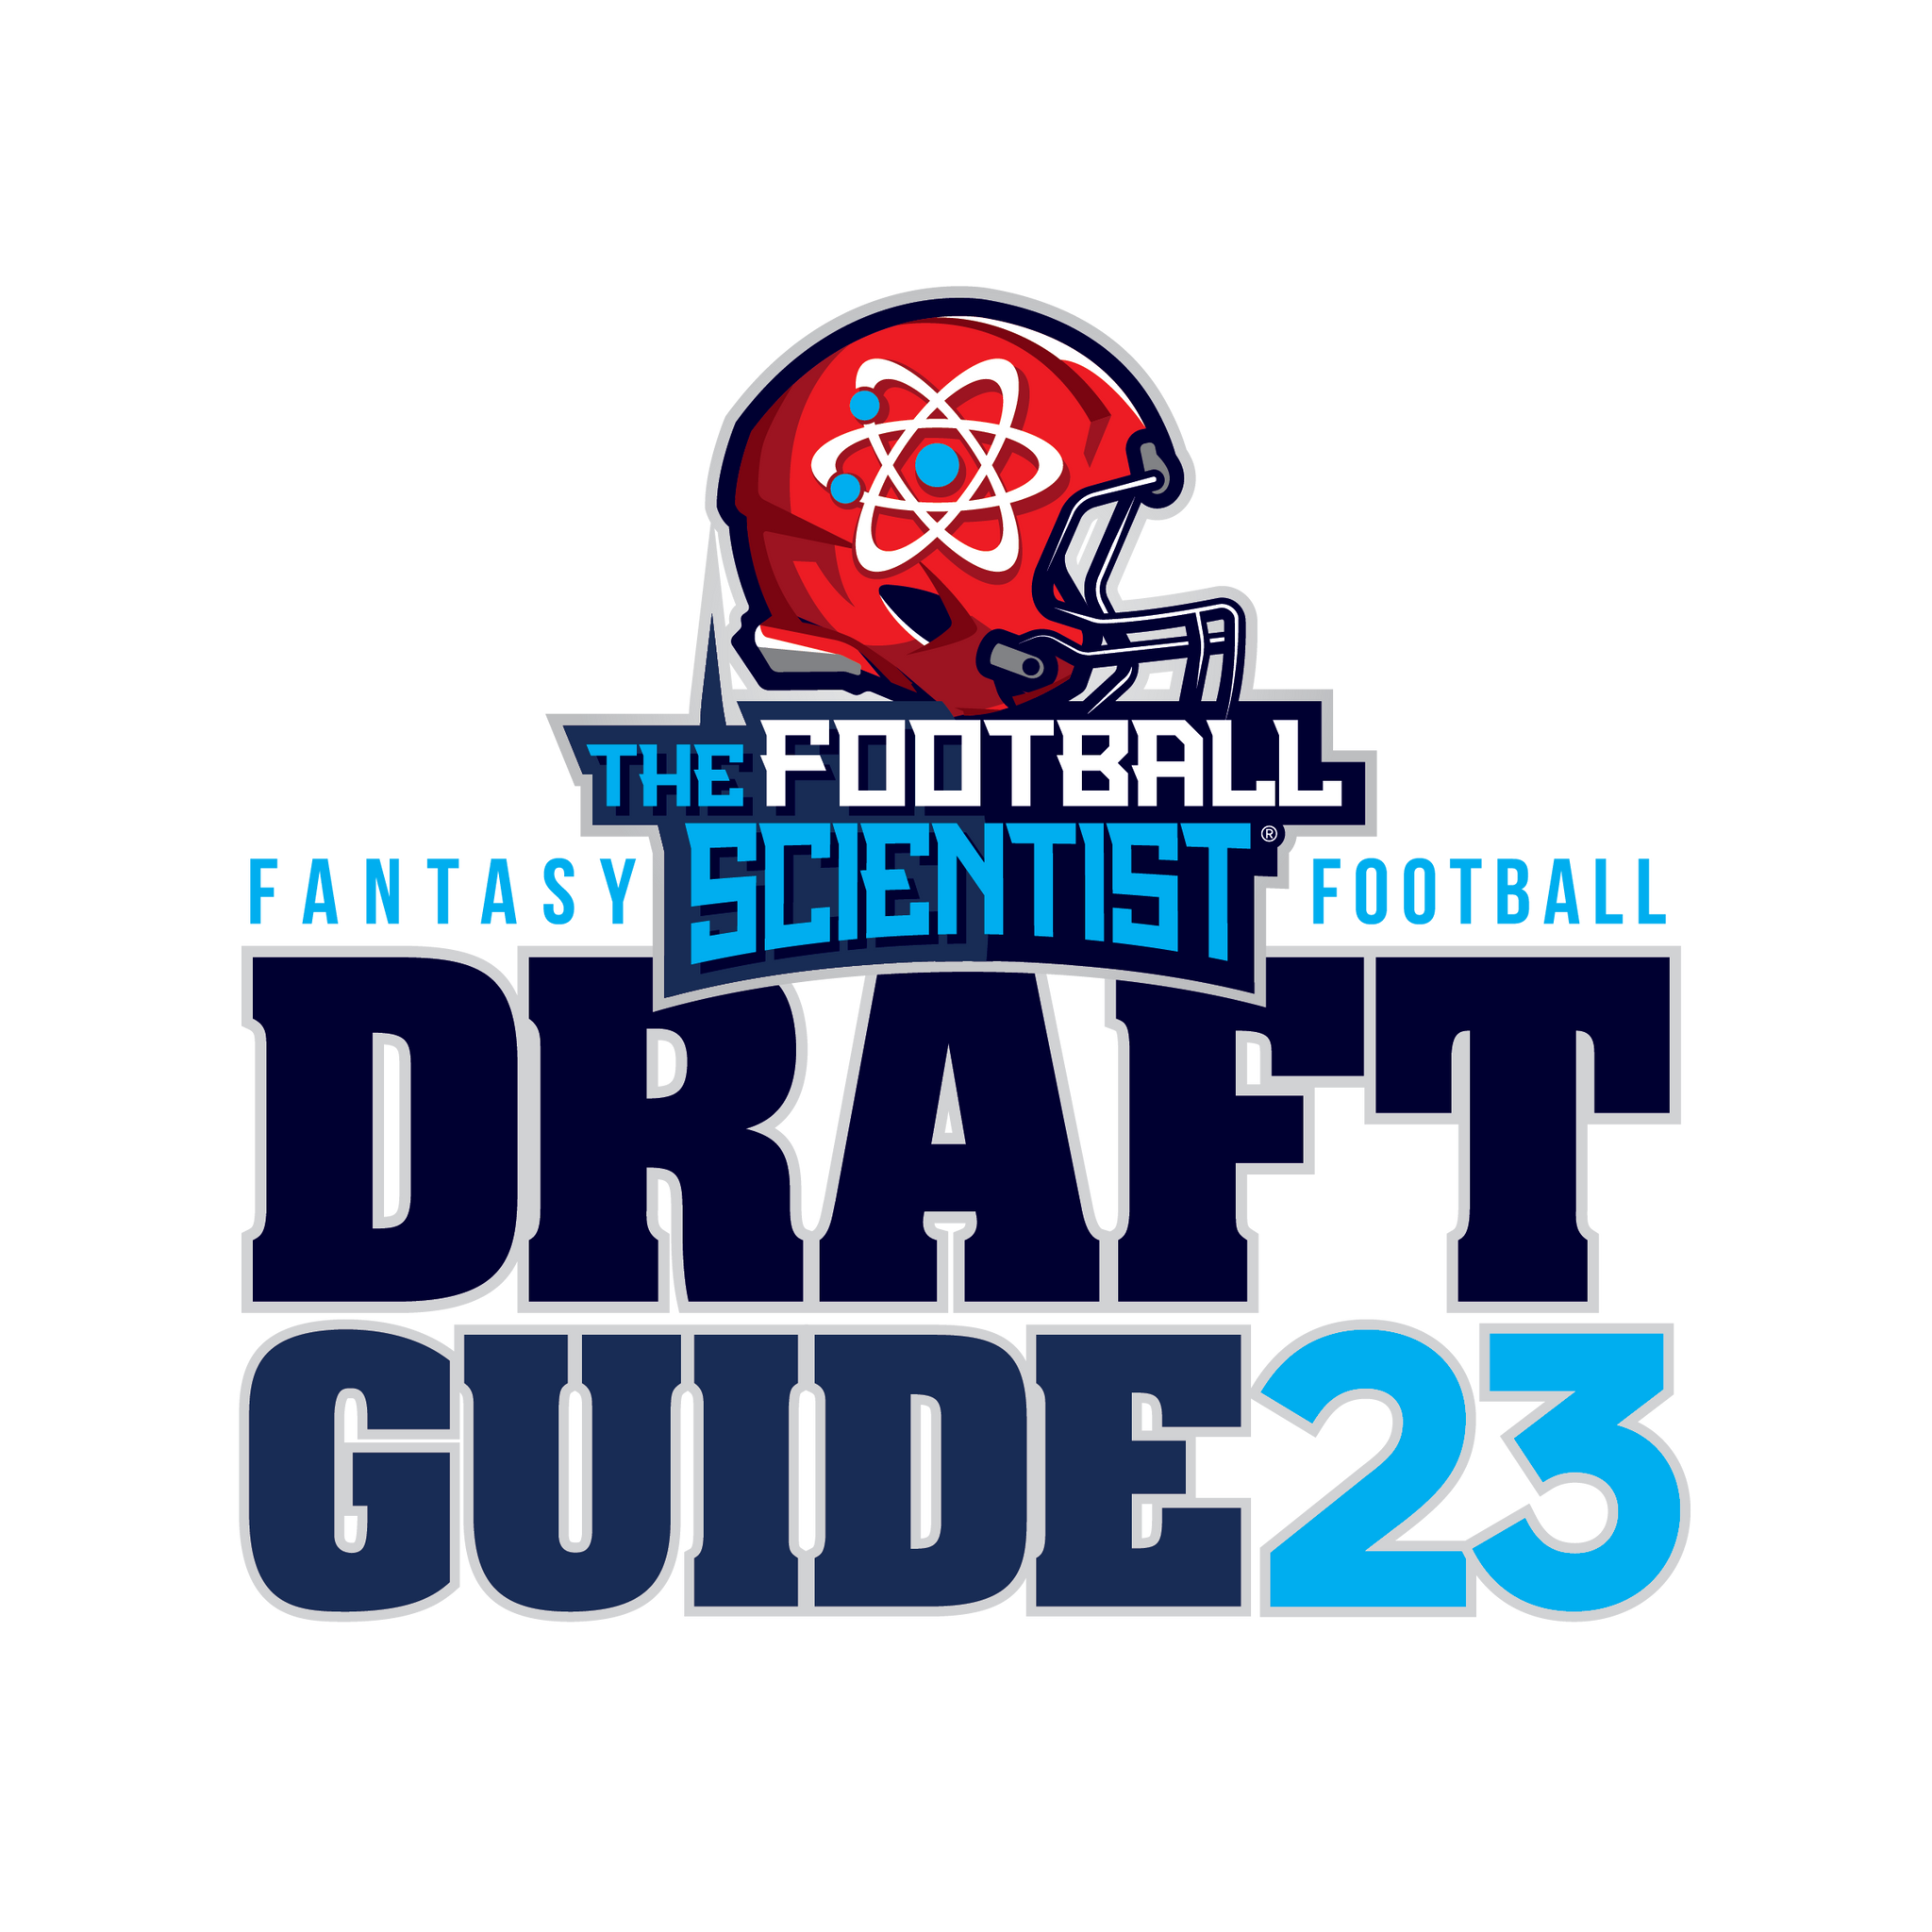 Fantasy Football Cheatsheet & Auction Draft Guide